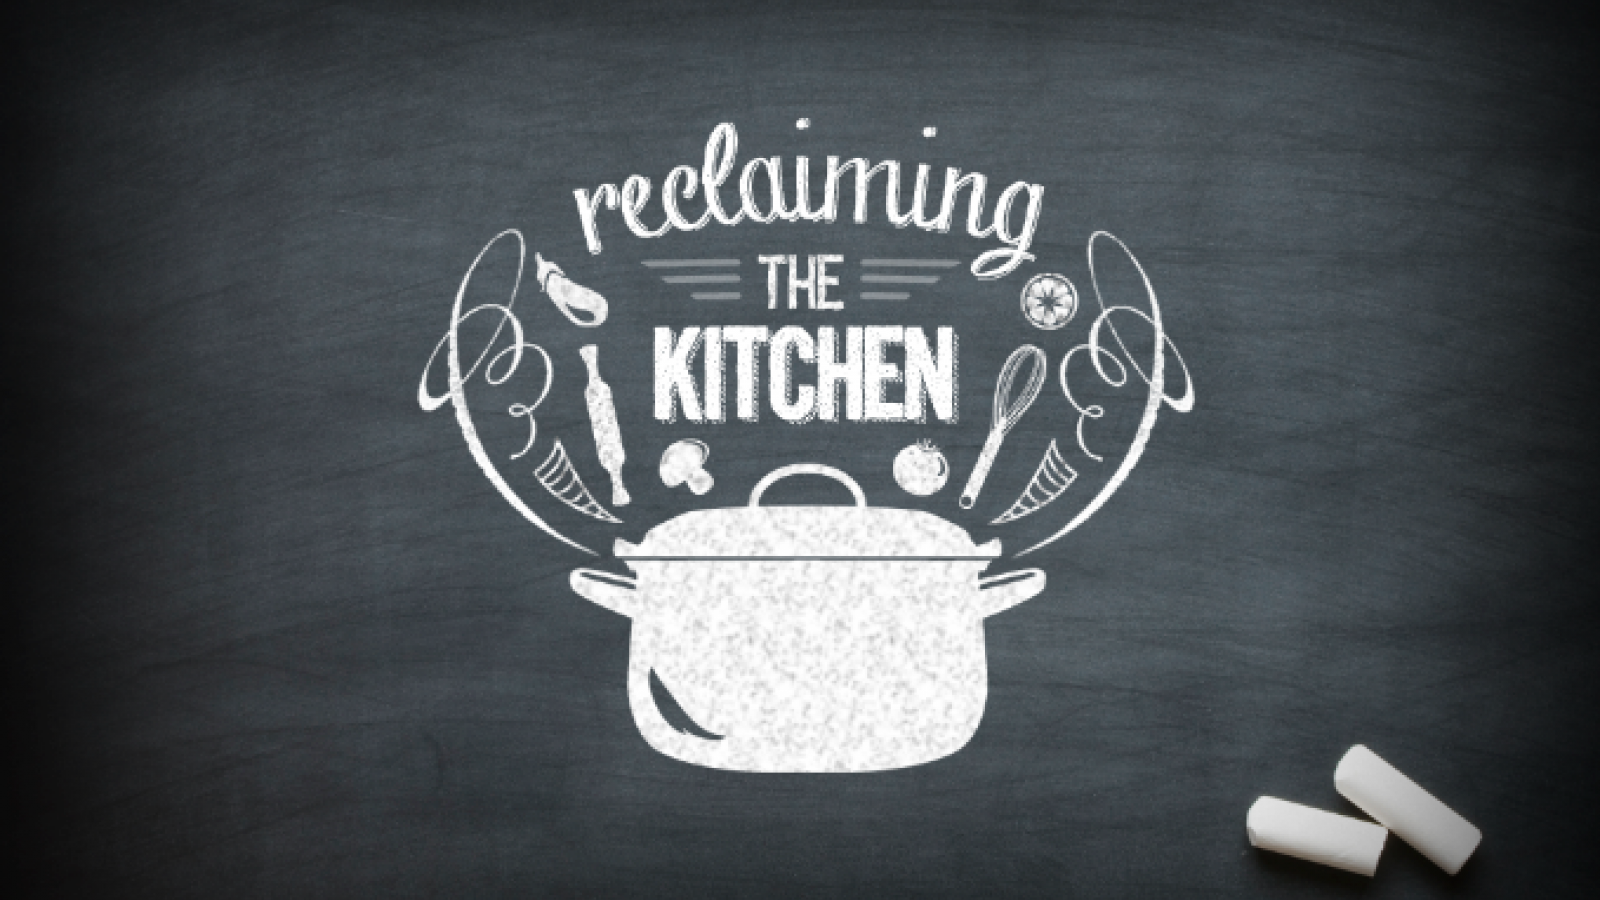 Reclaim your kitchen